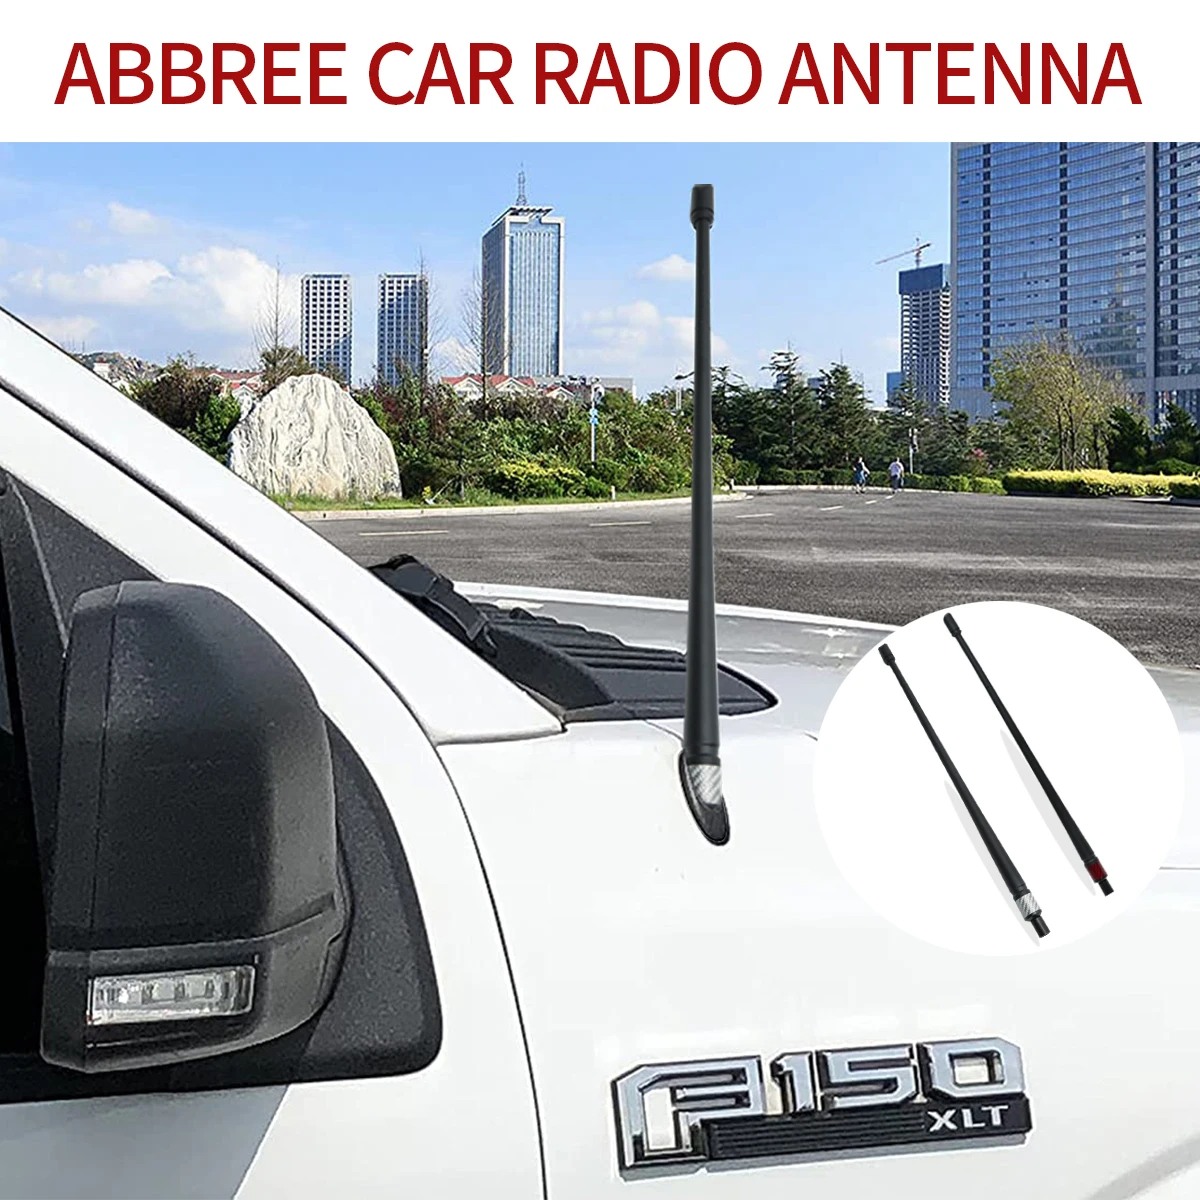 ABBREE Автомобильная радиоантенна Сменная Антенна Гибкая Резиновая Автомобильная антенна для Toyota Ford Mazda VW Audi Honda WRC Nissan